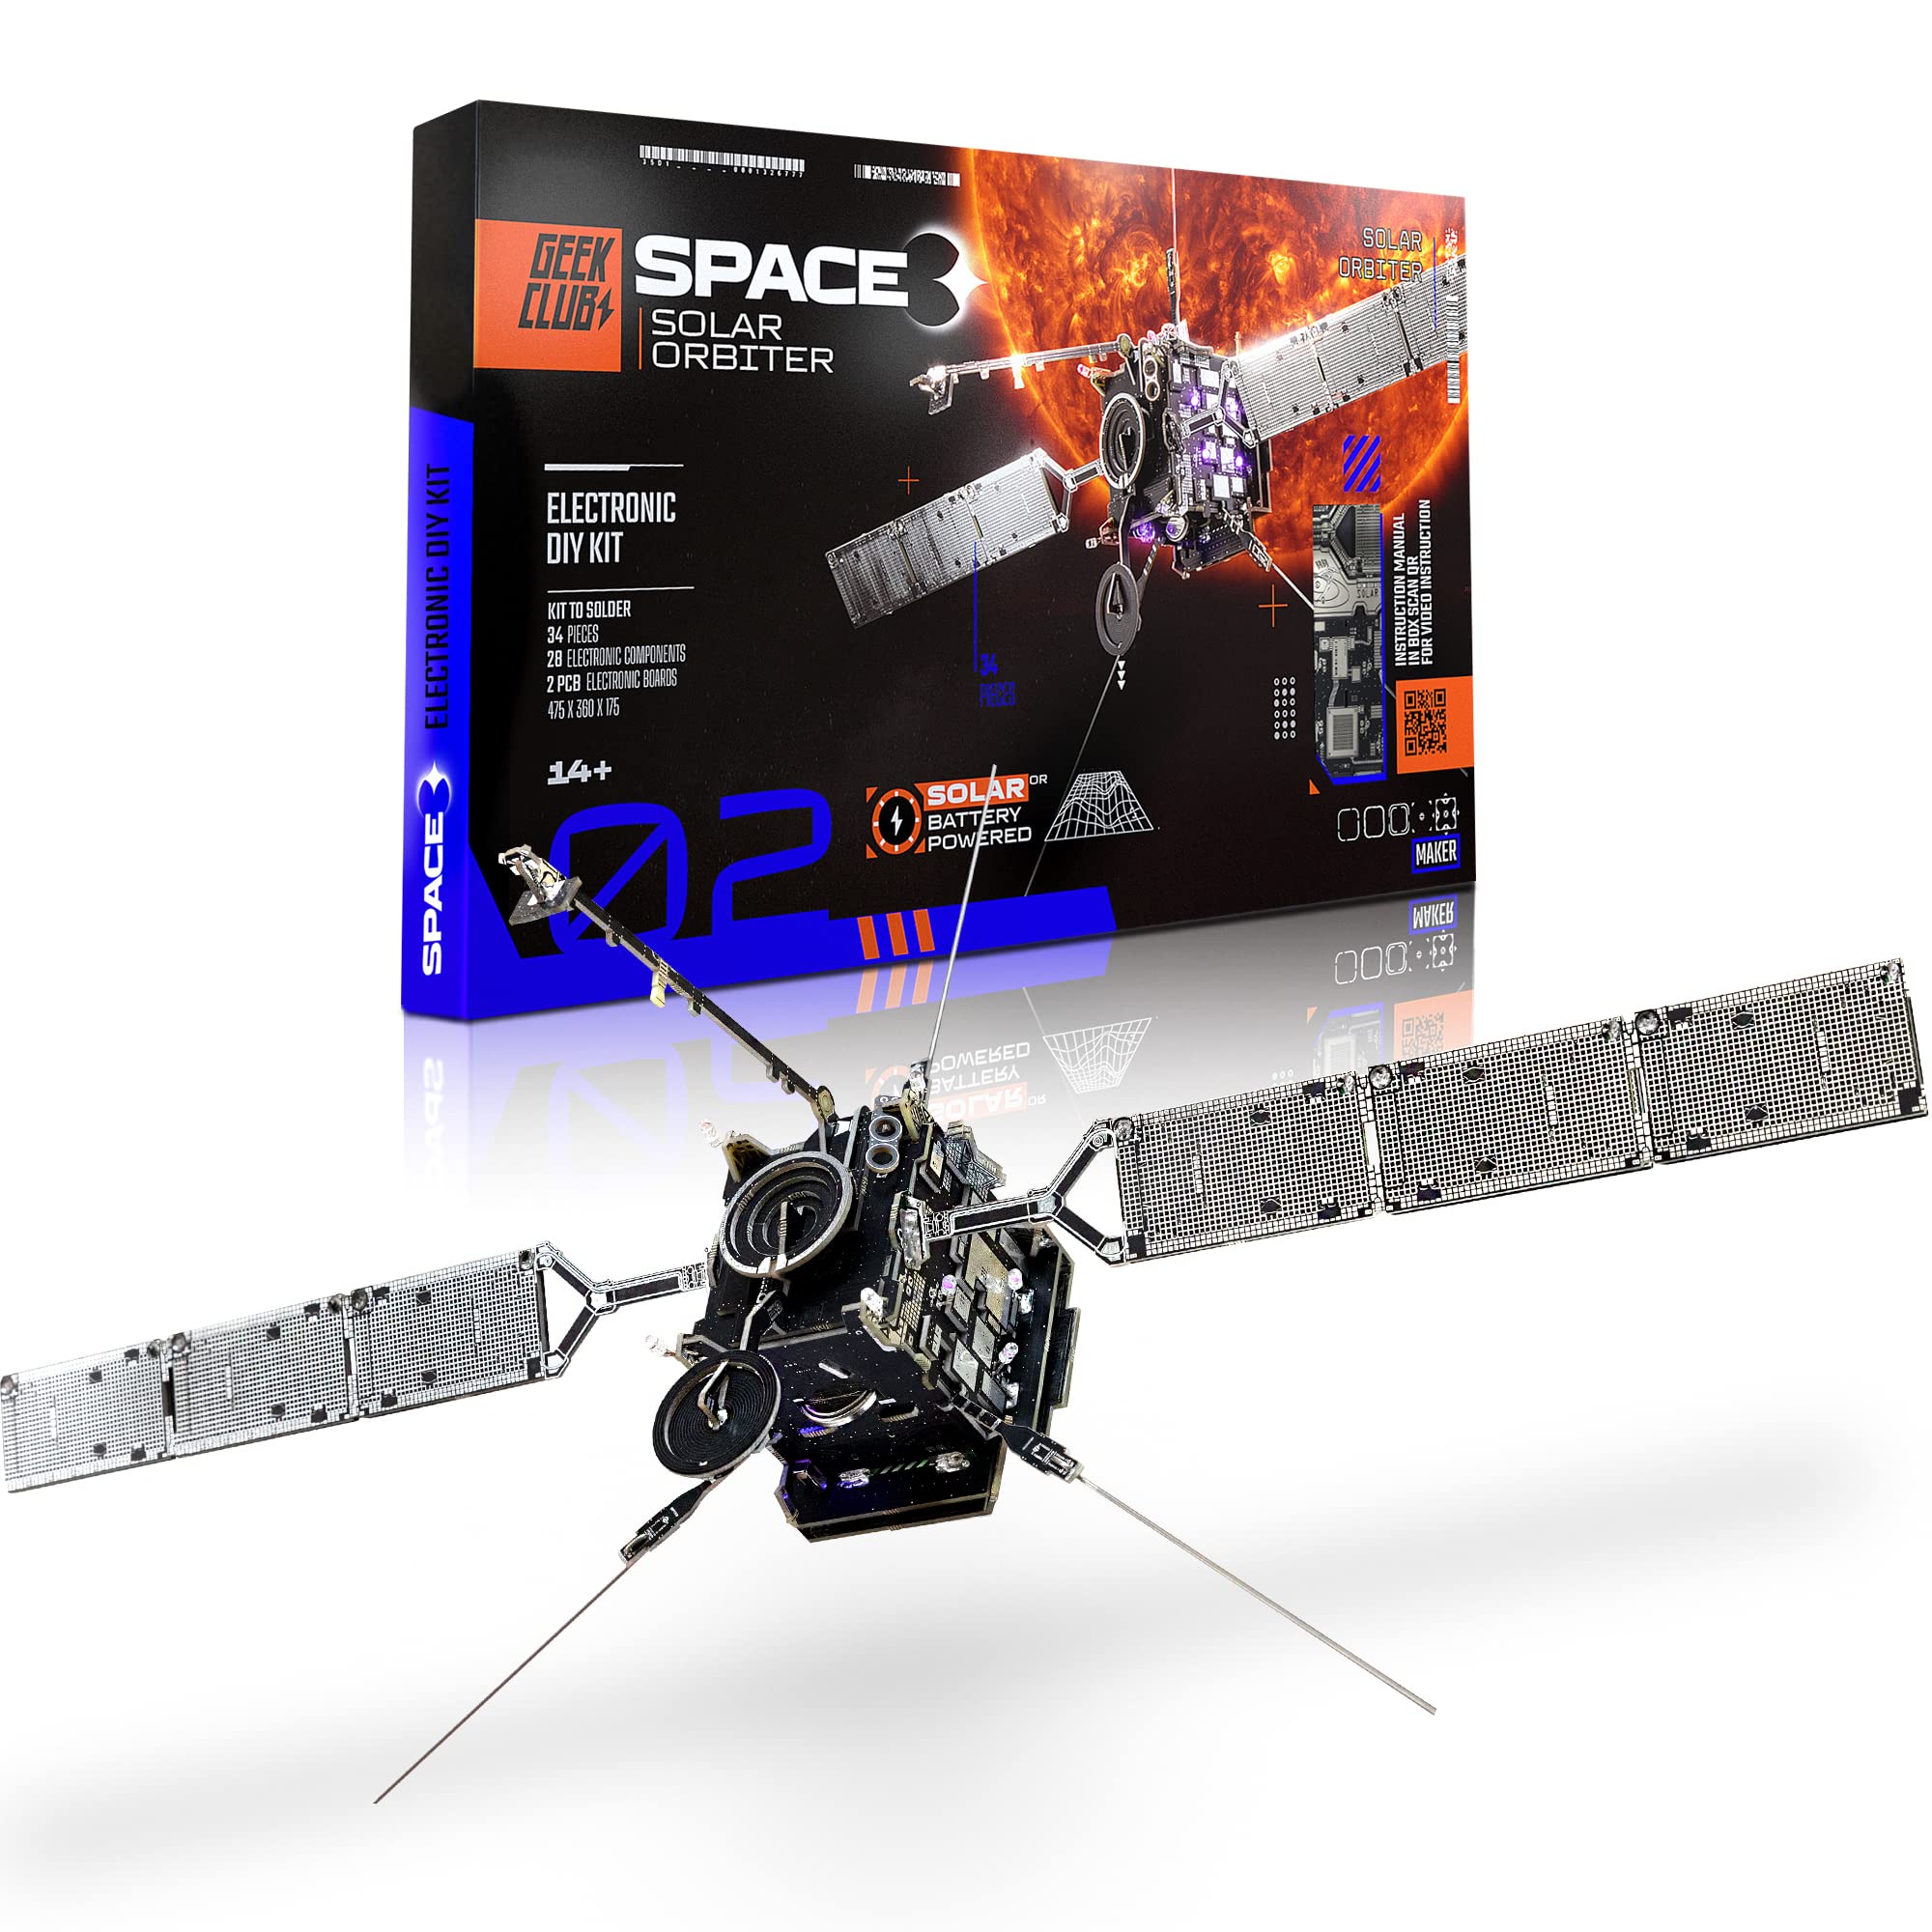 Geeek Club Space O DIY Engineering Kit - Solar Orbiter Model Building Kit - Solar-Powered Science Toy Kits - Educational STEM